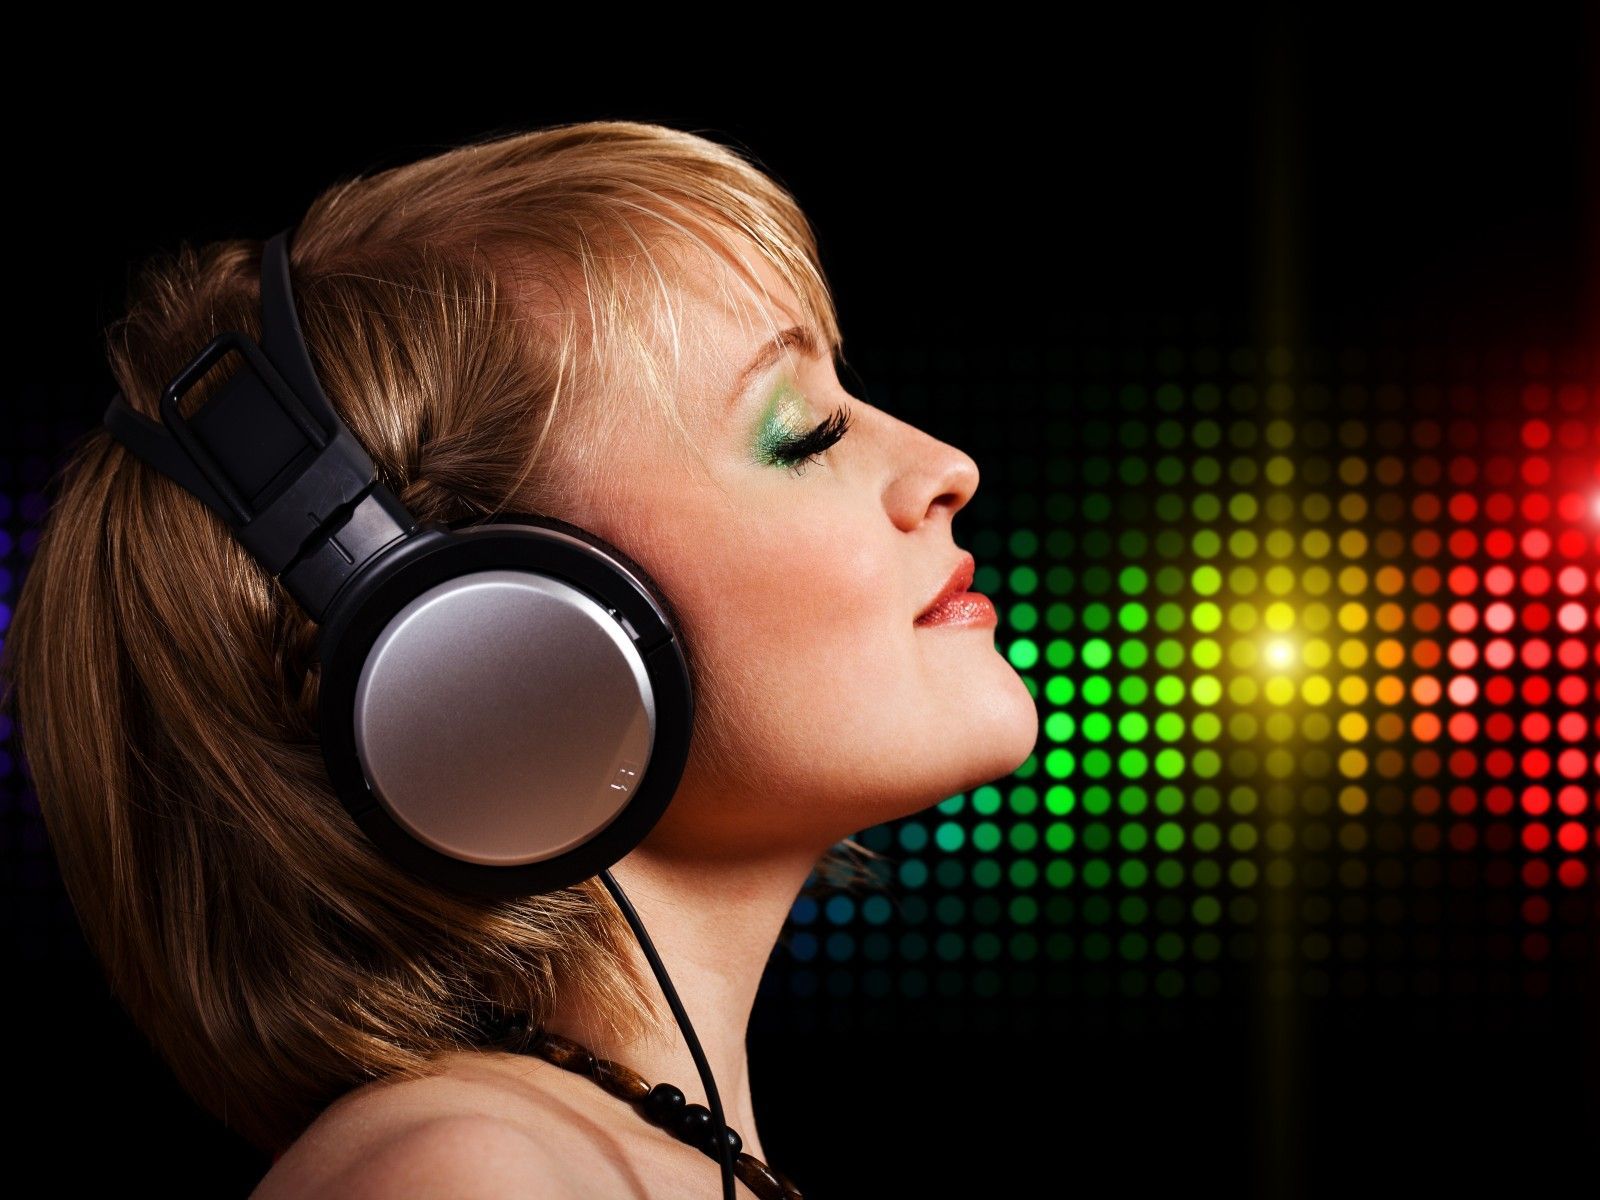 Girl Listening Music. HD WallpaperHD Wallpaper. Girl with headphones, Music, Listening to music